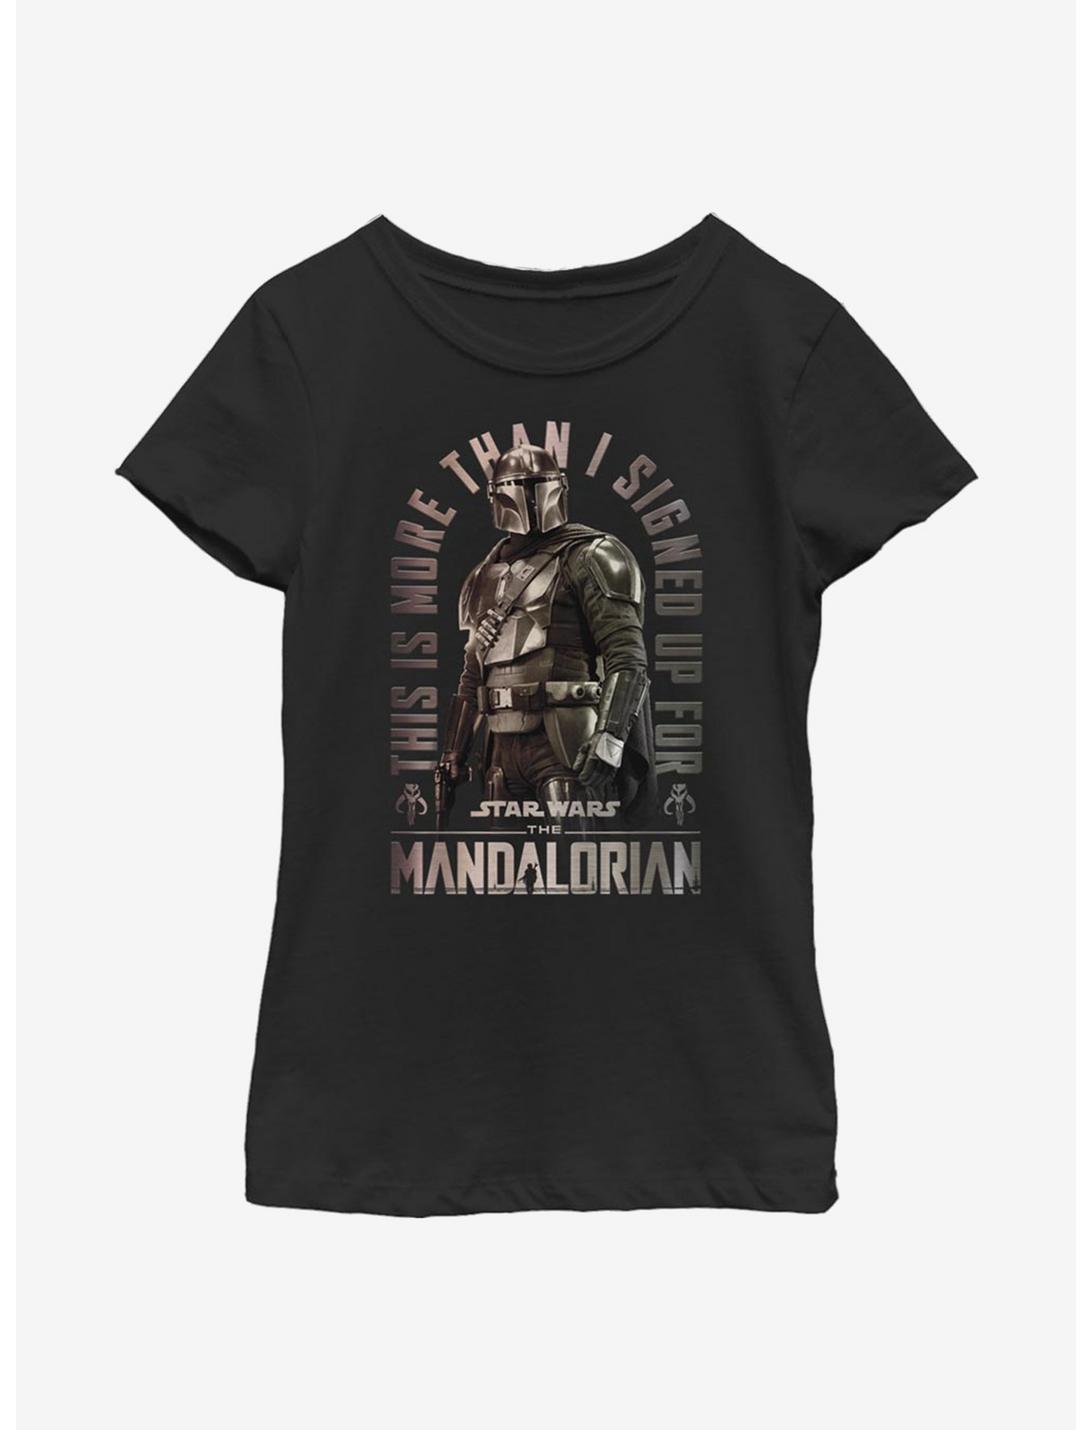 Star Wars The Mandalorian Signed Up Youth Girls T-Shirt, BLACK, hi-res